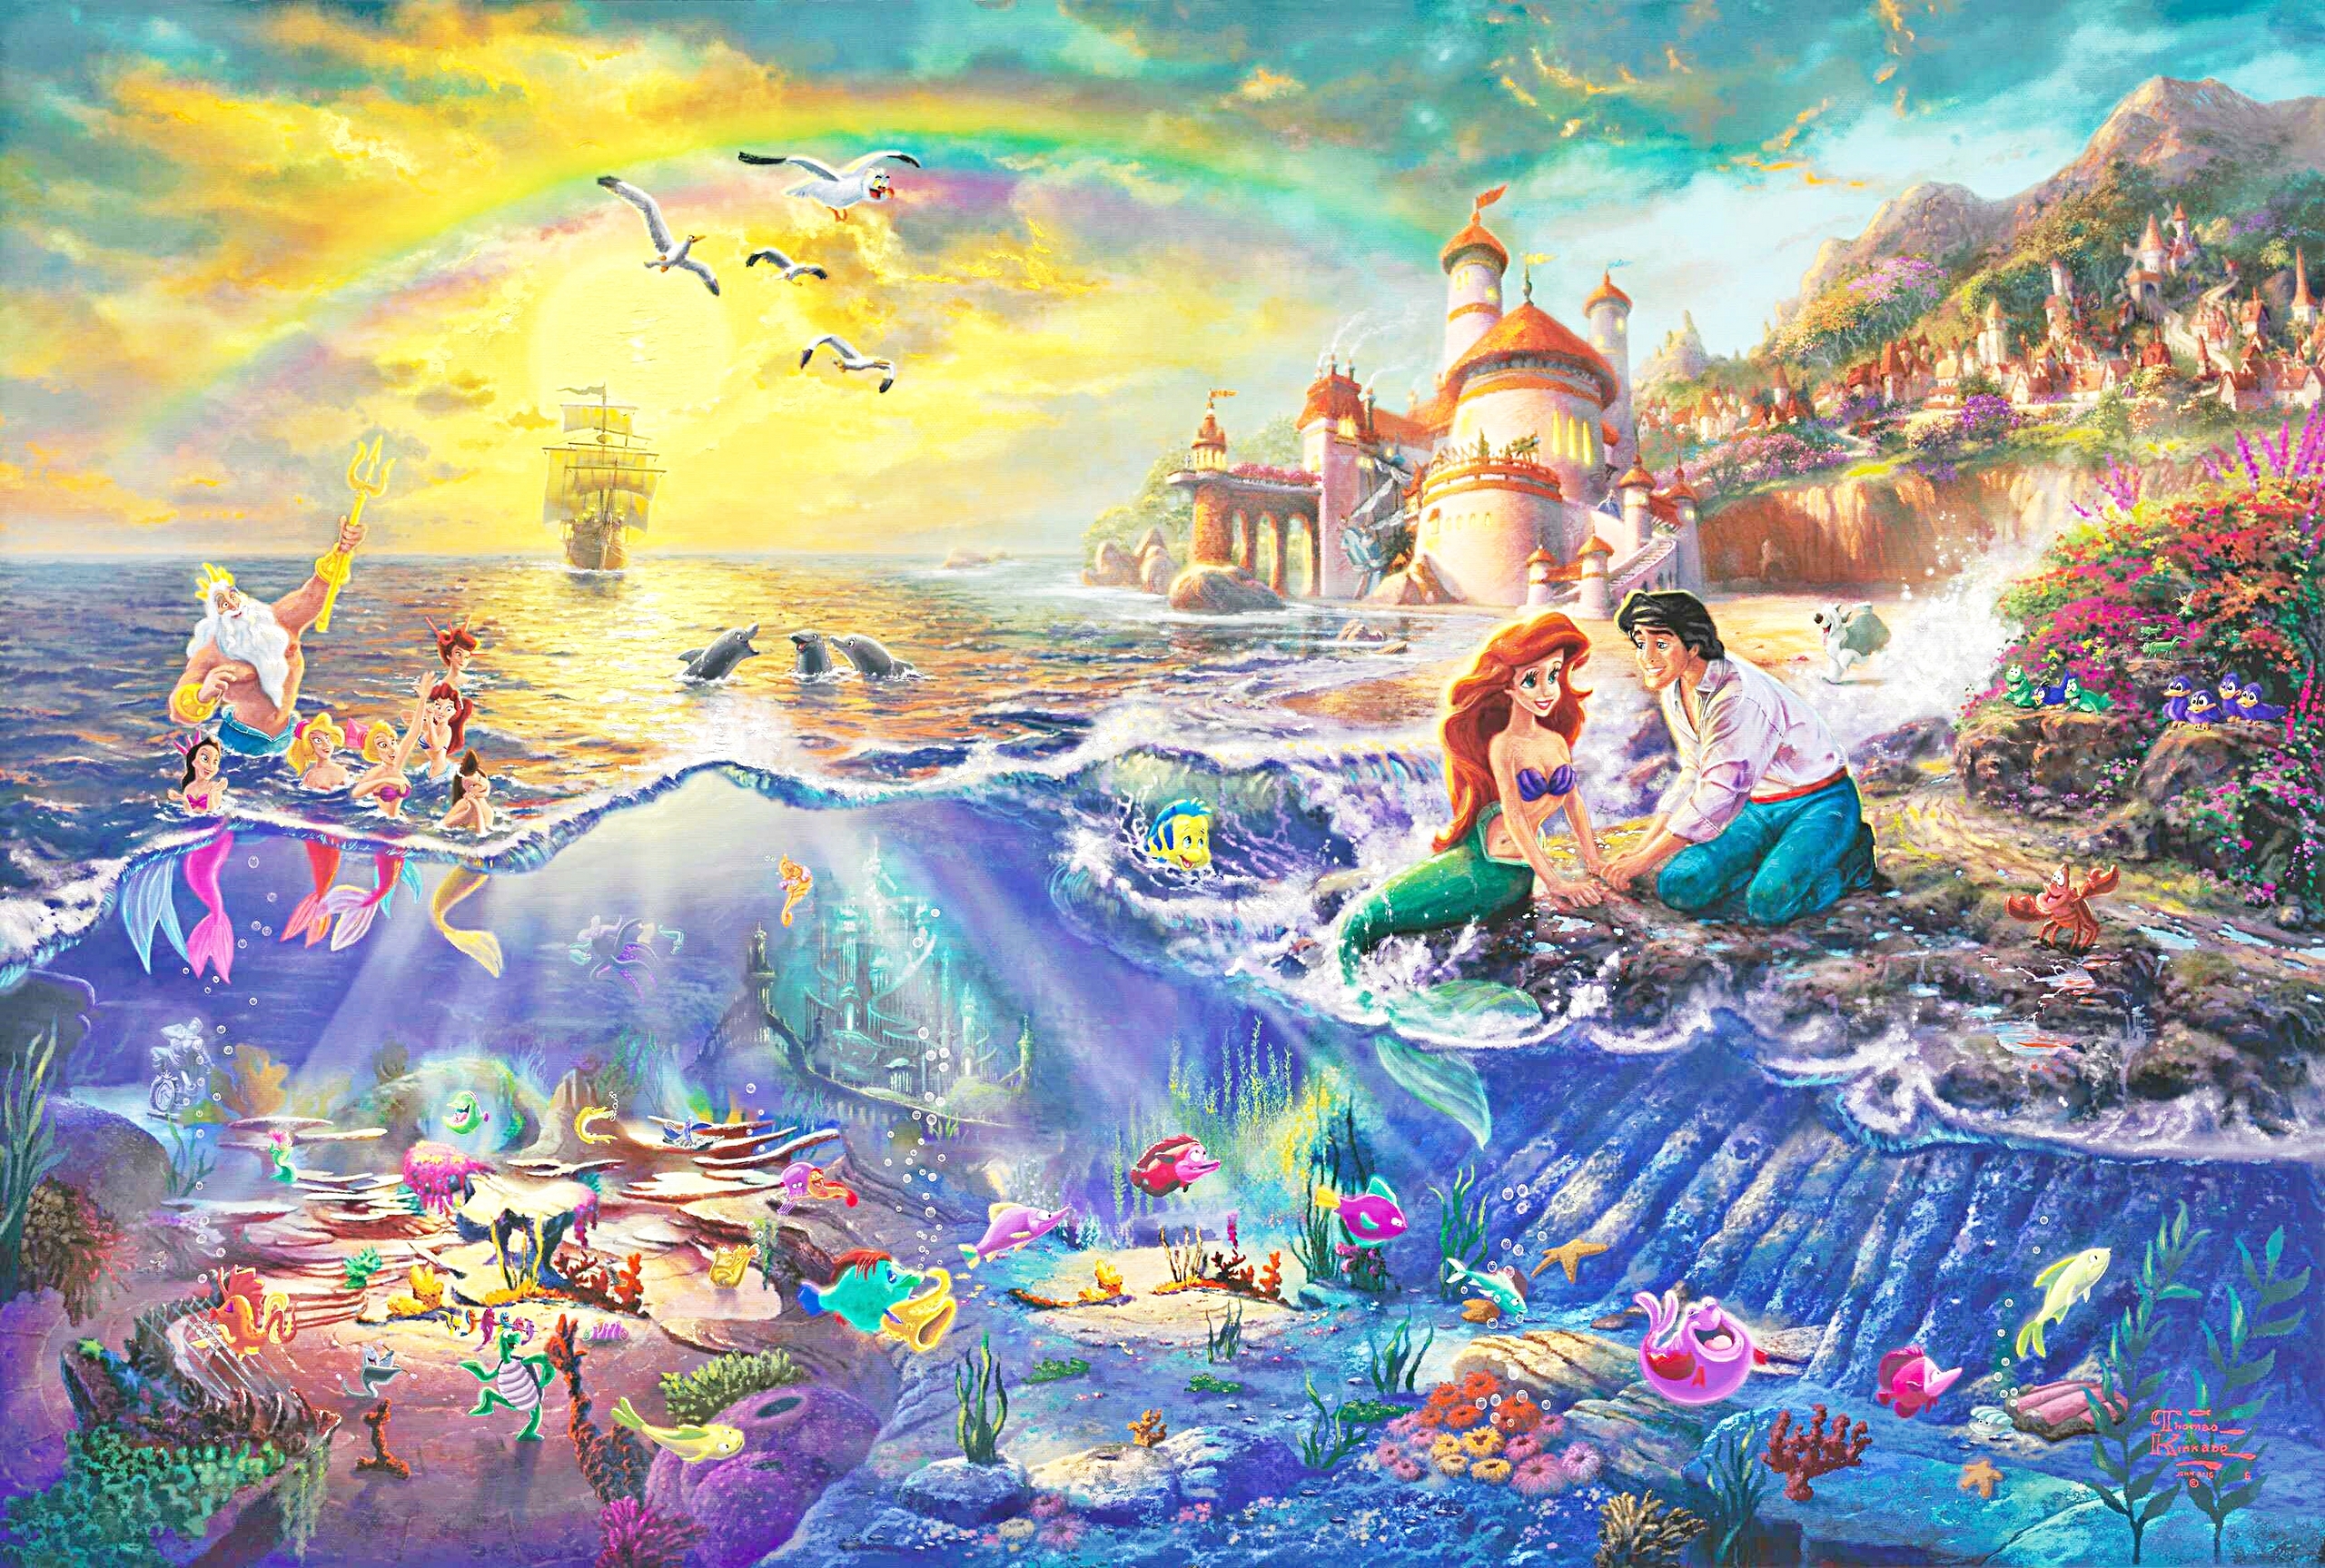 Thomas Kinkade's Disney Paintings - The Little Mermaid